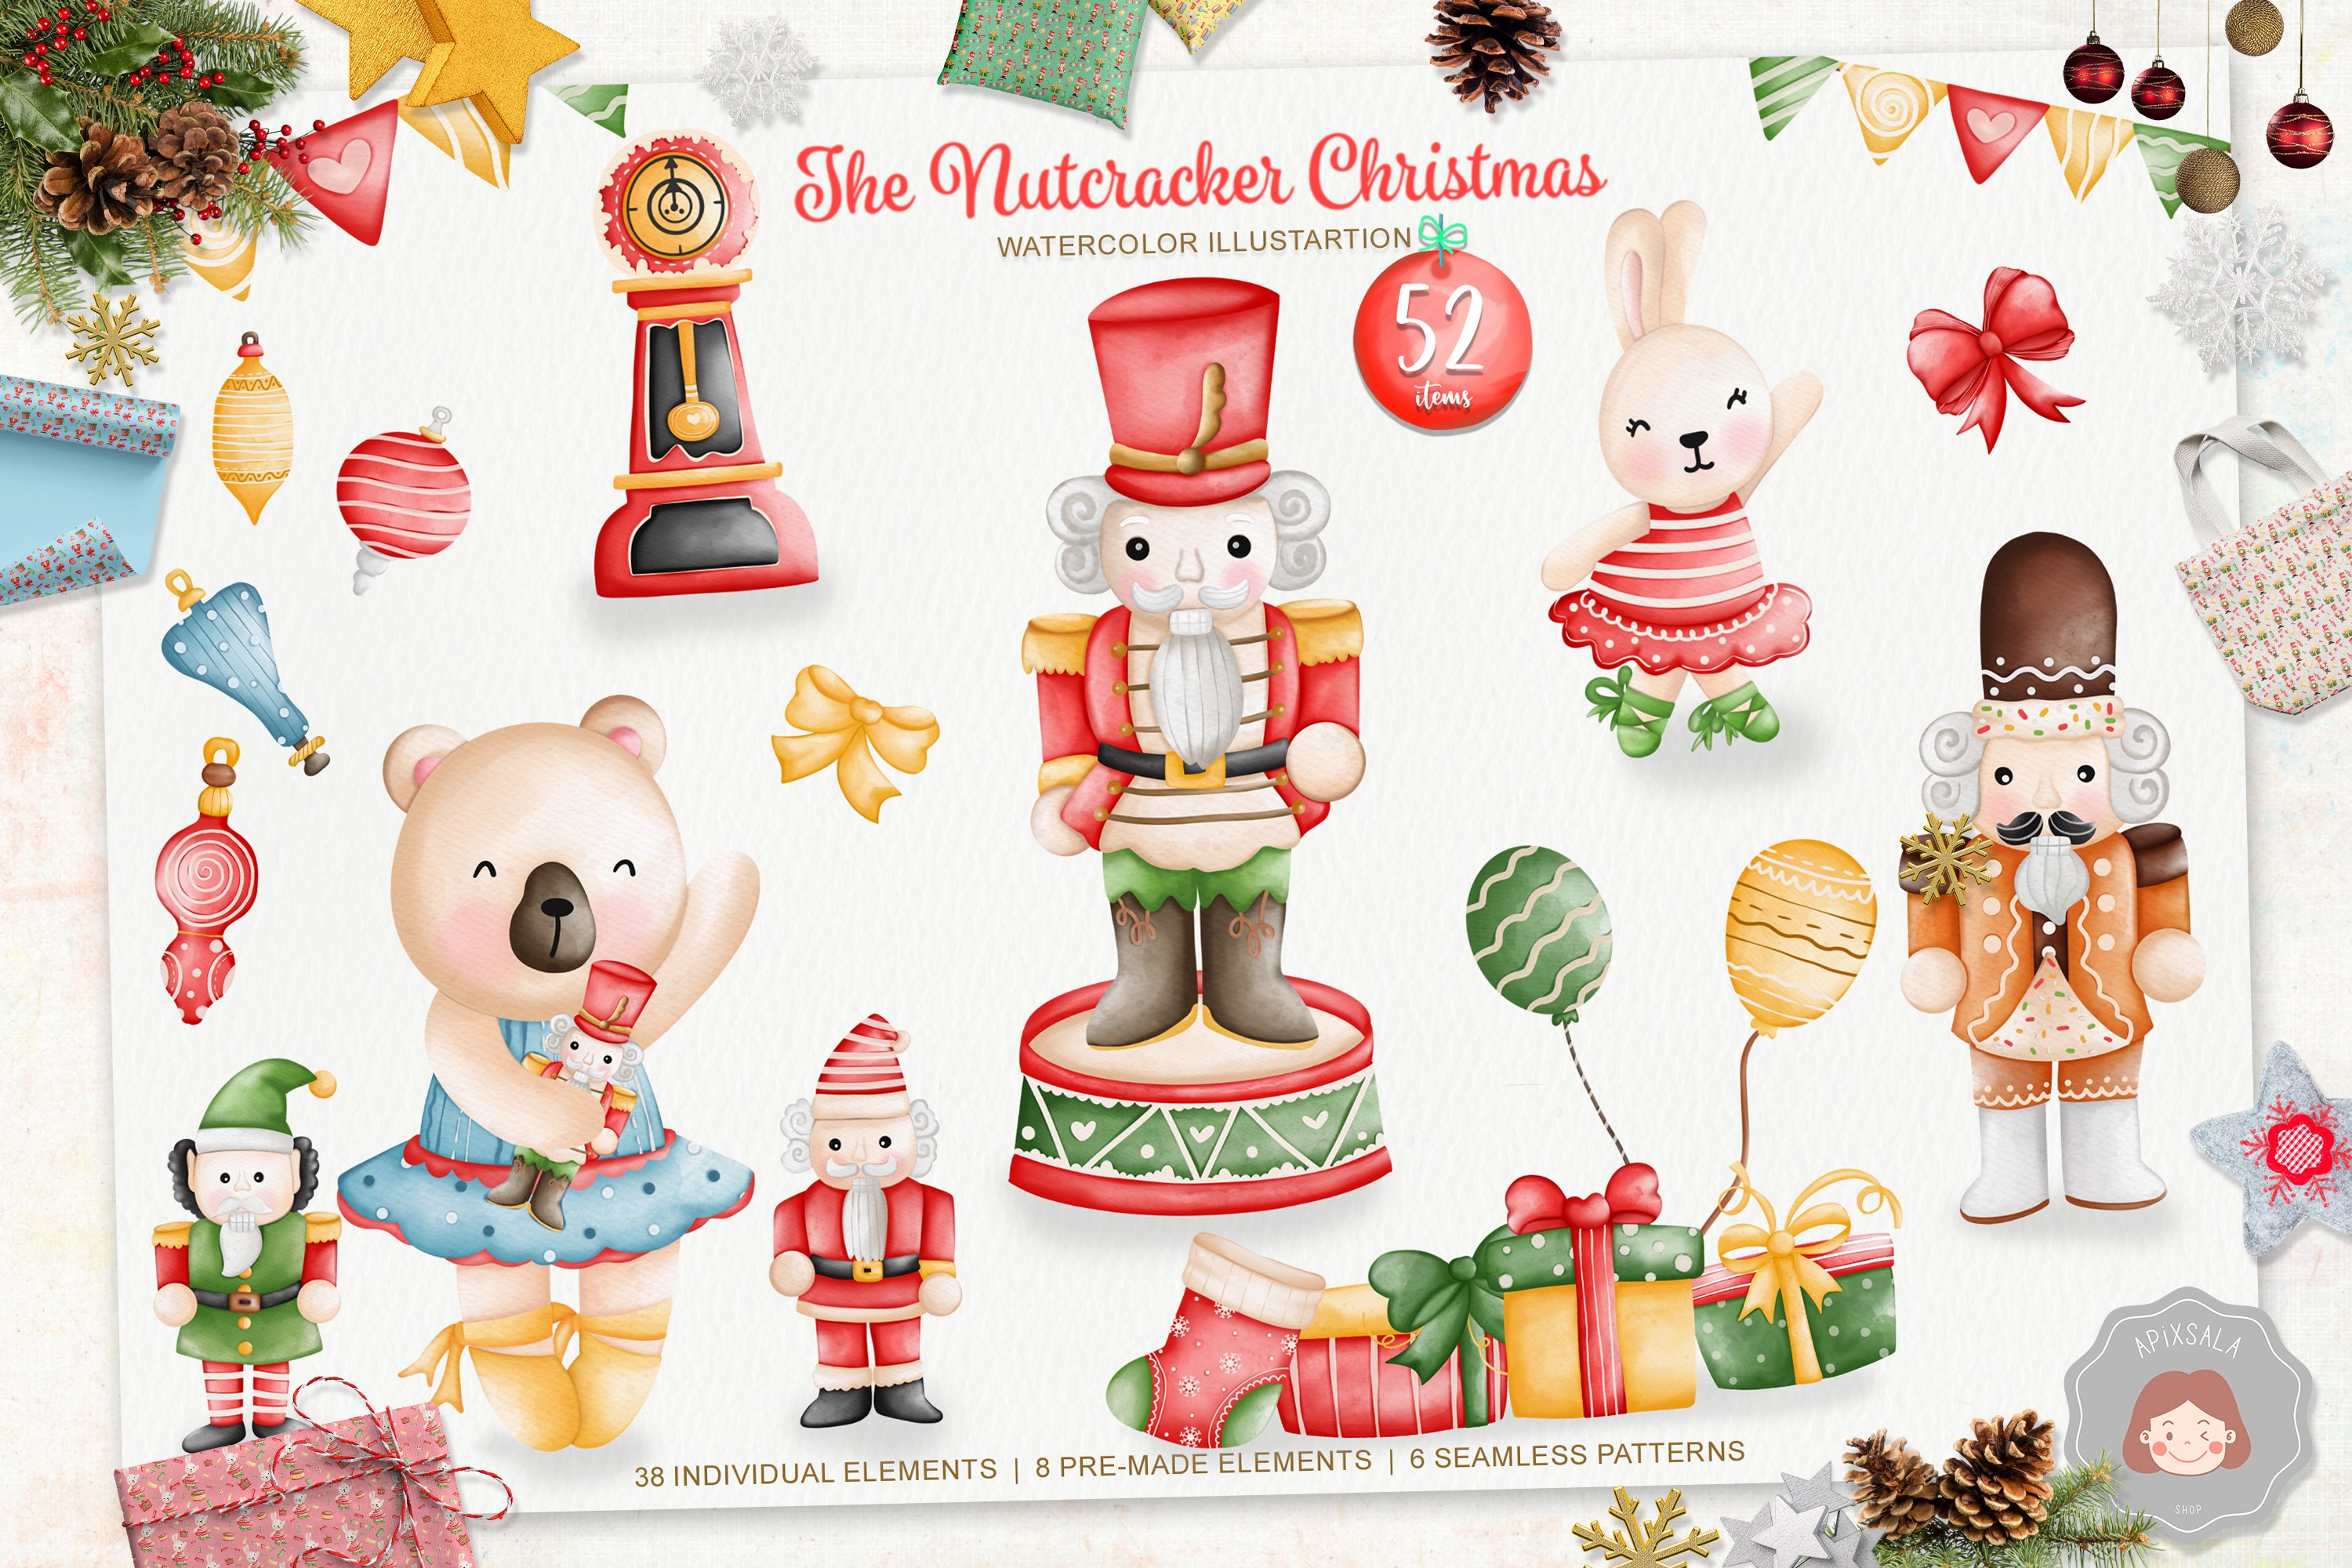 Soldier Nutcracker Christmas Set cover image.